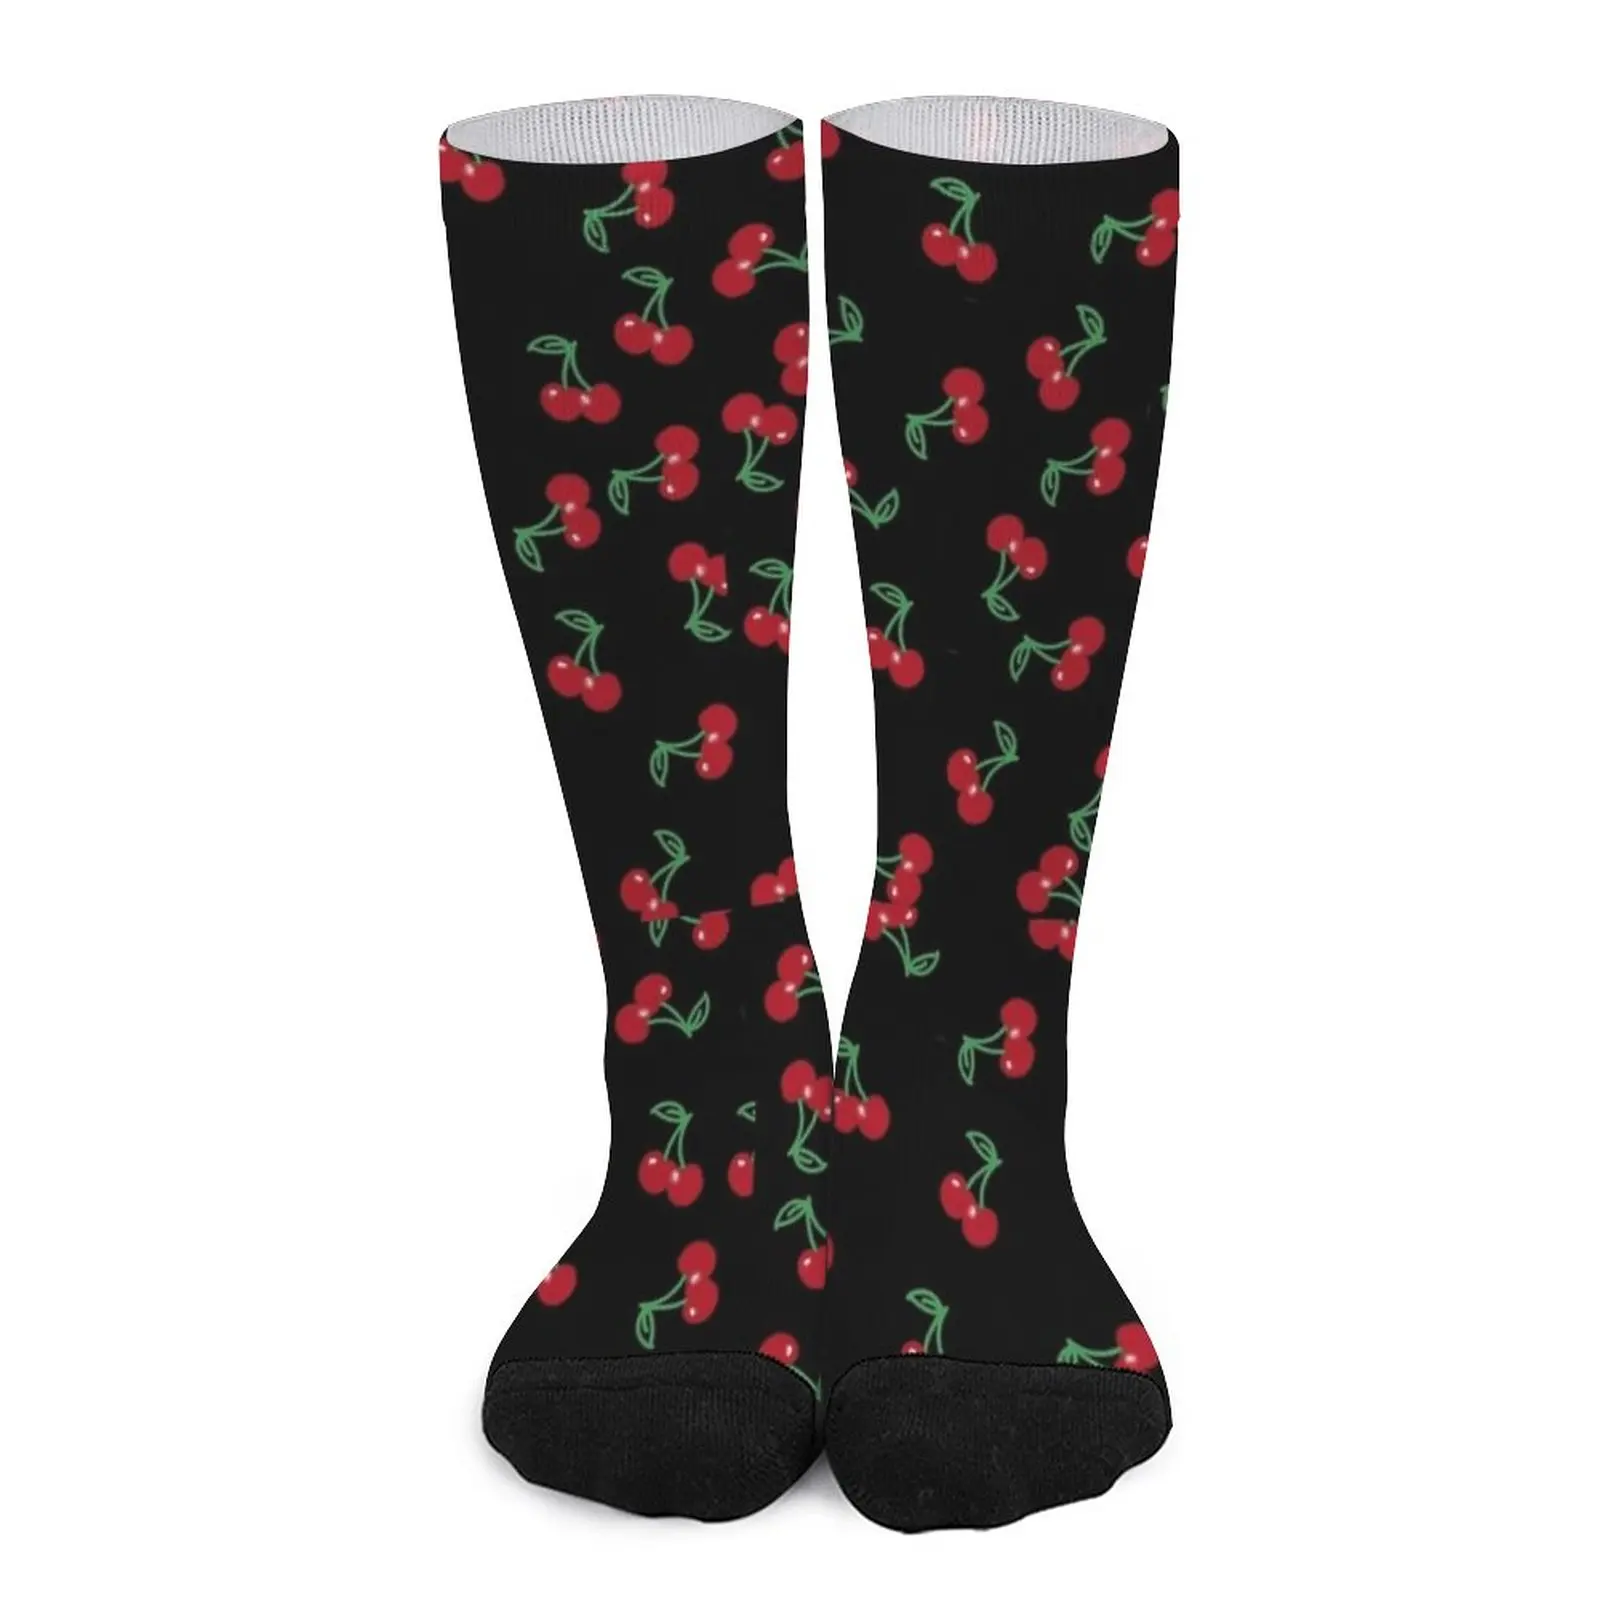 Cute Red Cherry with Green Stem Pattern Print Socks socks for Women retro MEN FASHION heated socks